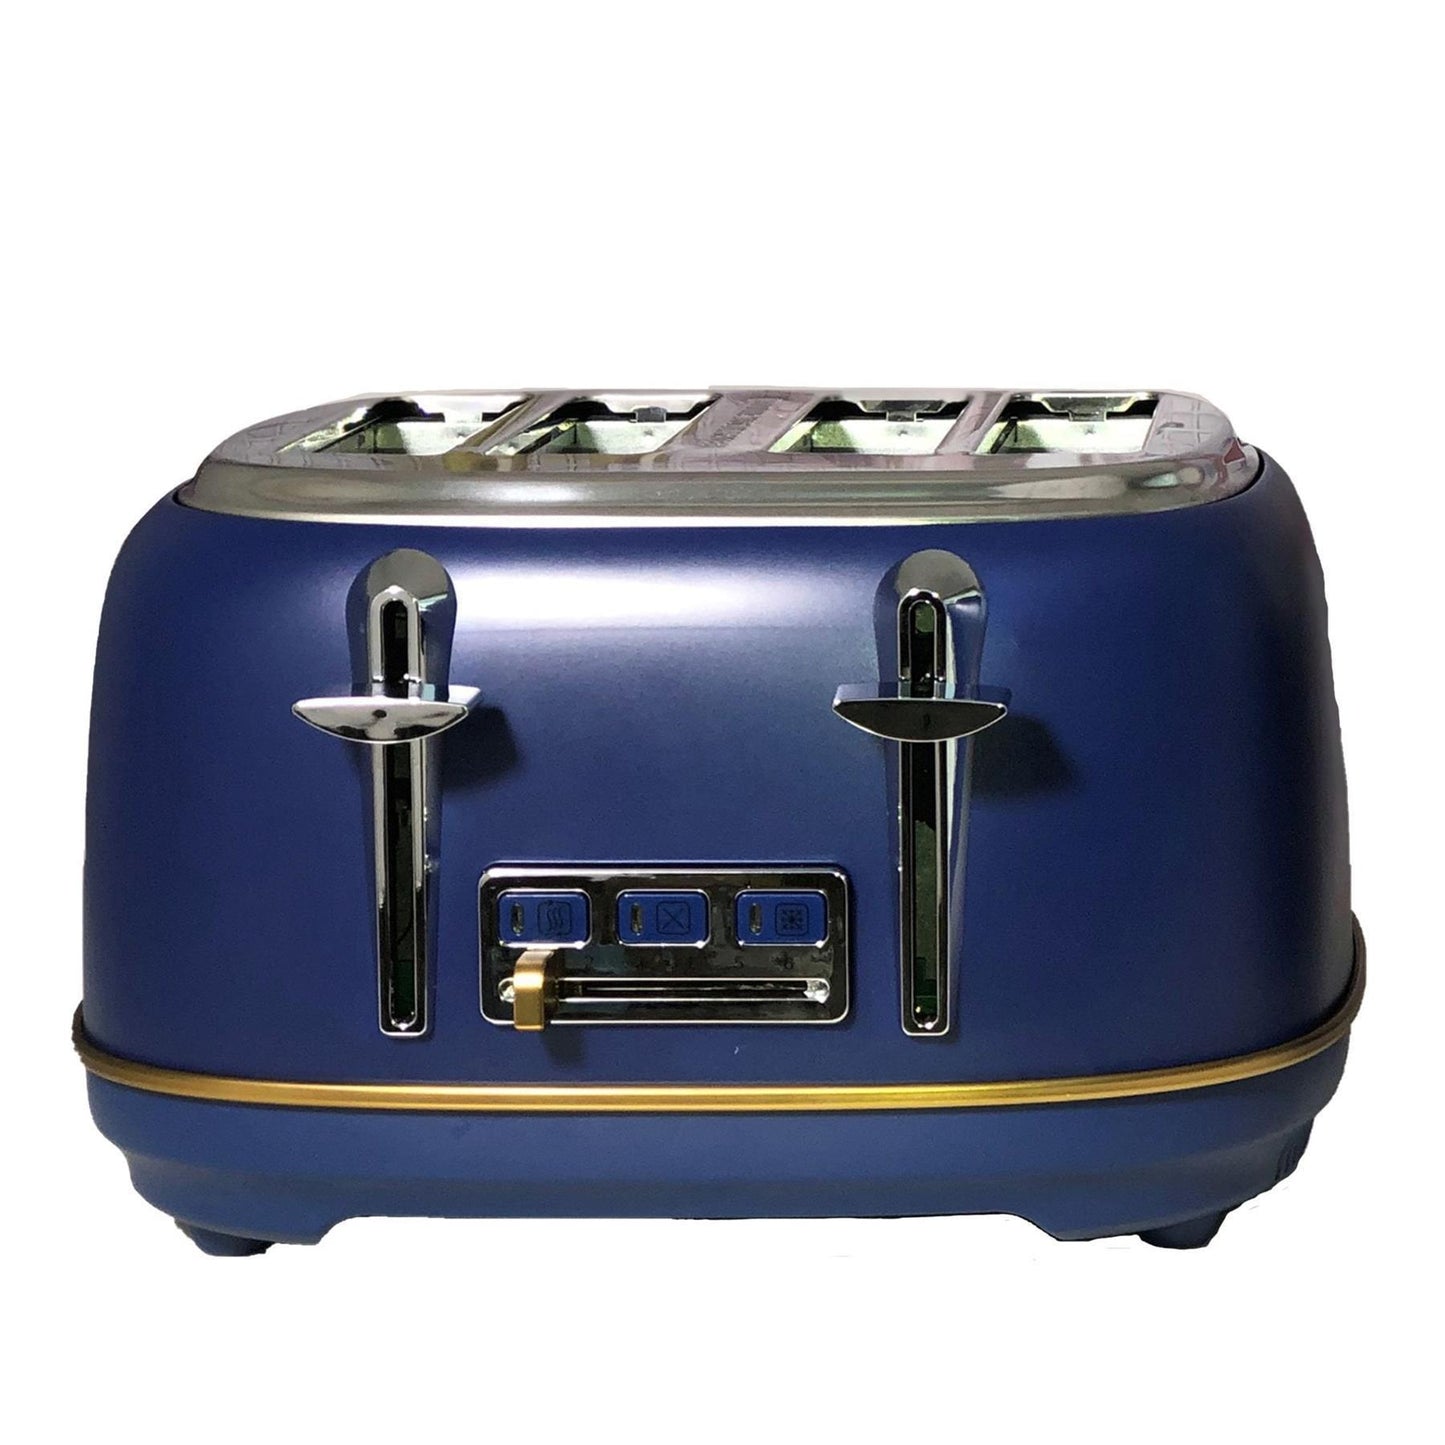 Daewoo Astoria 1.7L Kettle & 4 Slice Toaster Navy Blue Combo Set